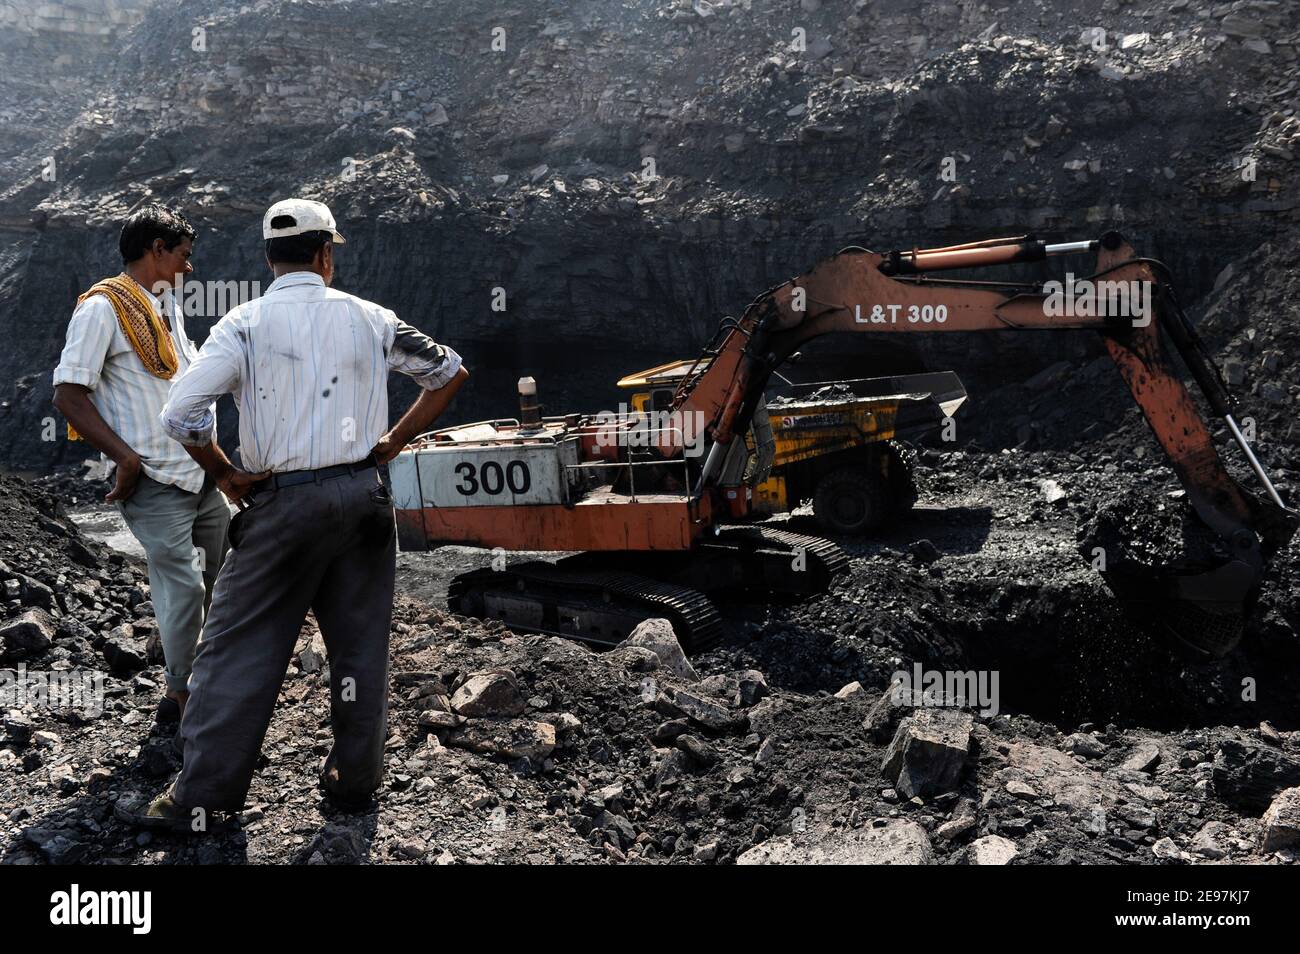 INDIA Dhanbad, Tagebau von BCCL Ltd a company of COAL INDIA , L&T Digger and large BEML Dumper / INDIEN Dhanbad , offener Kohle Tagebau von BCCL Ltd. Ein Tochterunternehmen von Coal India Stockfoto